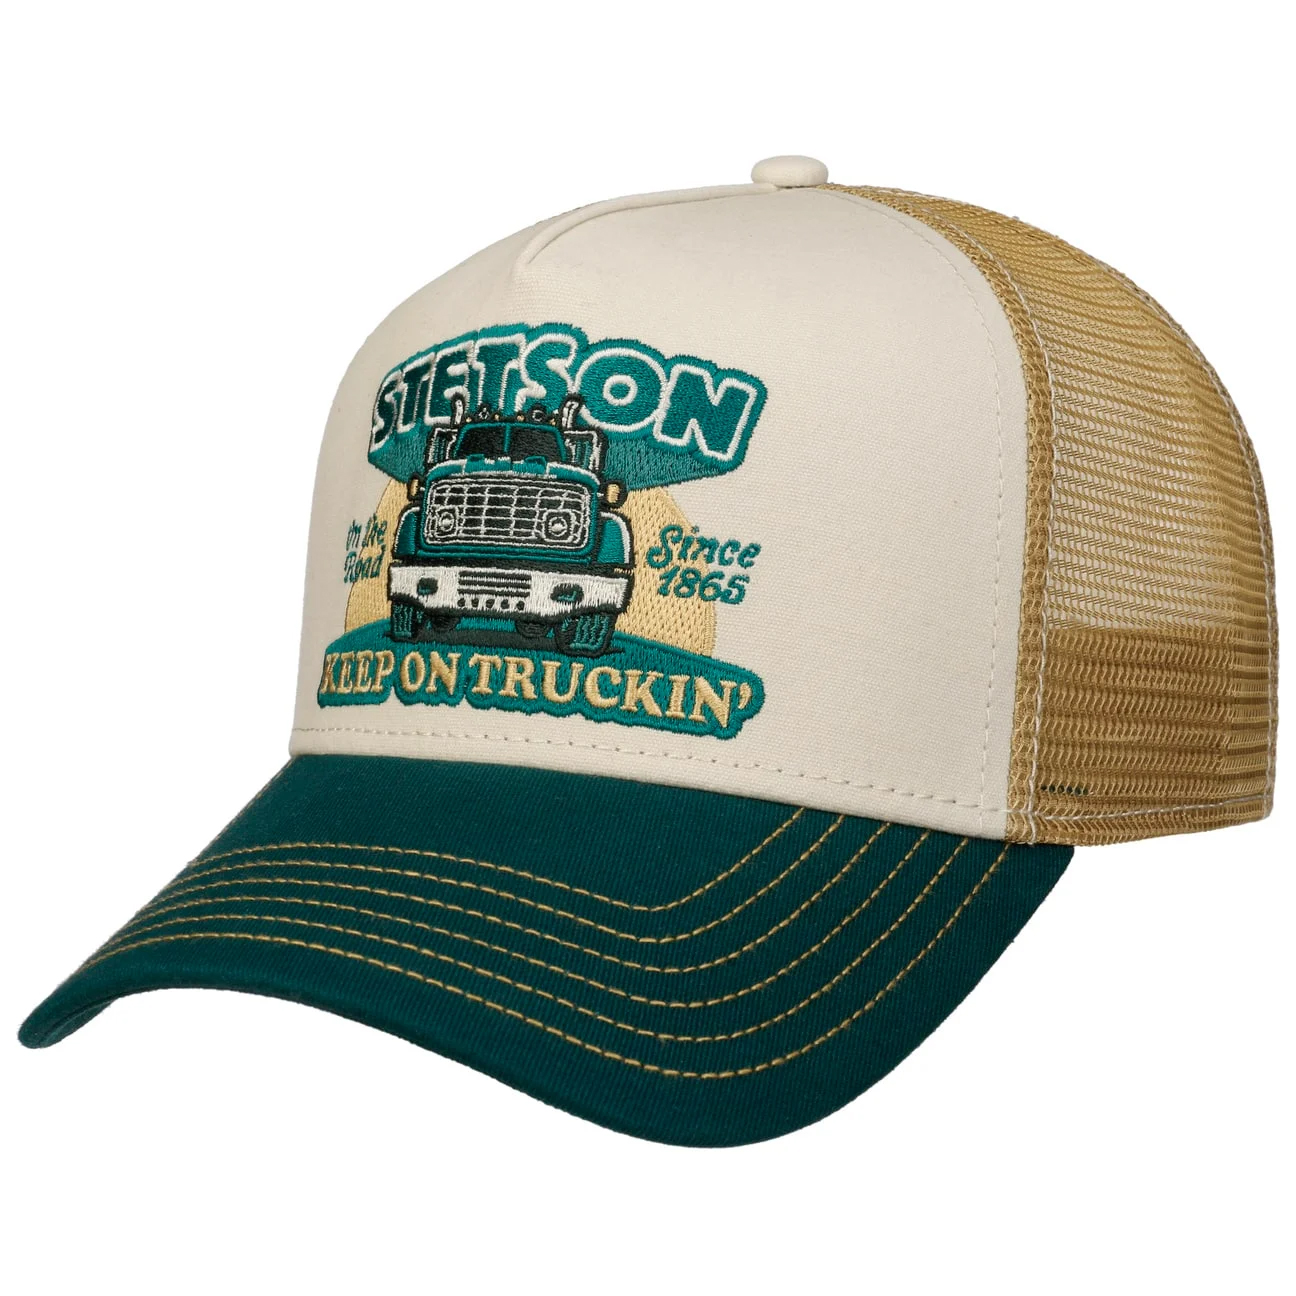 Stetson - Keep On Trucking Trucker Cap - Dark Green